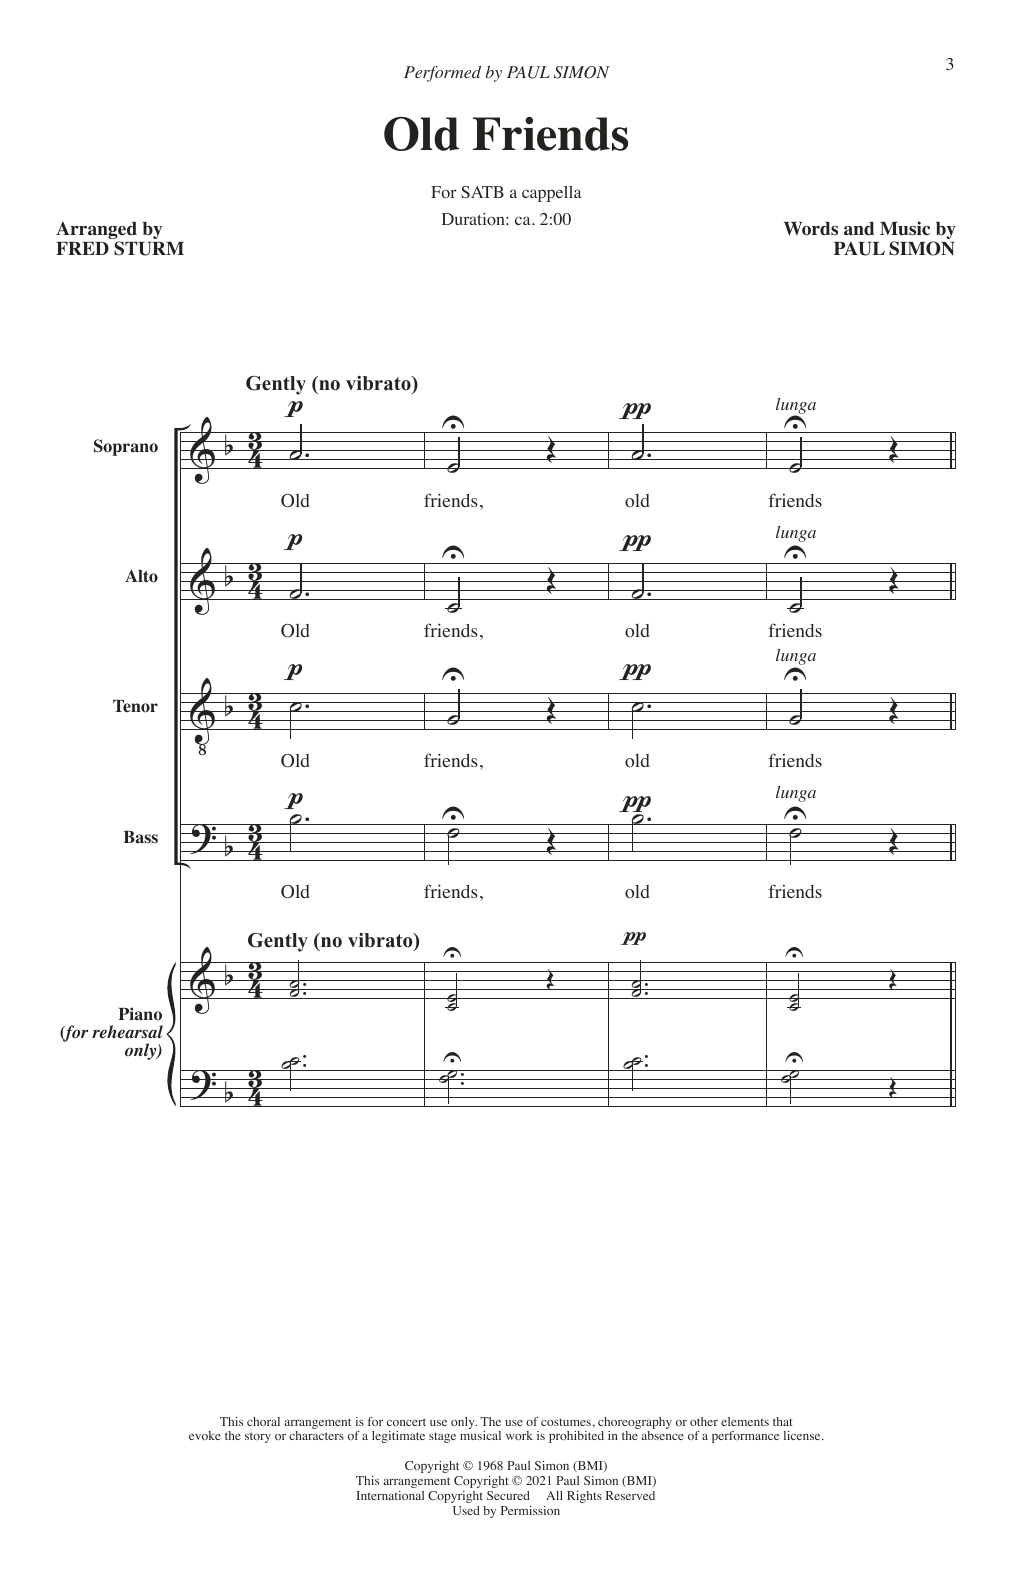 Simon & Garfunkel Old Friends (arr. Fred Sturm) sheet music notes and chords arranged for SATB Choir